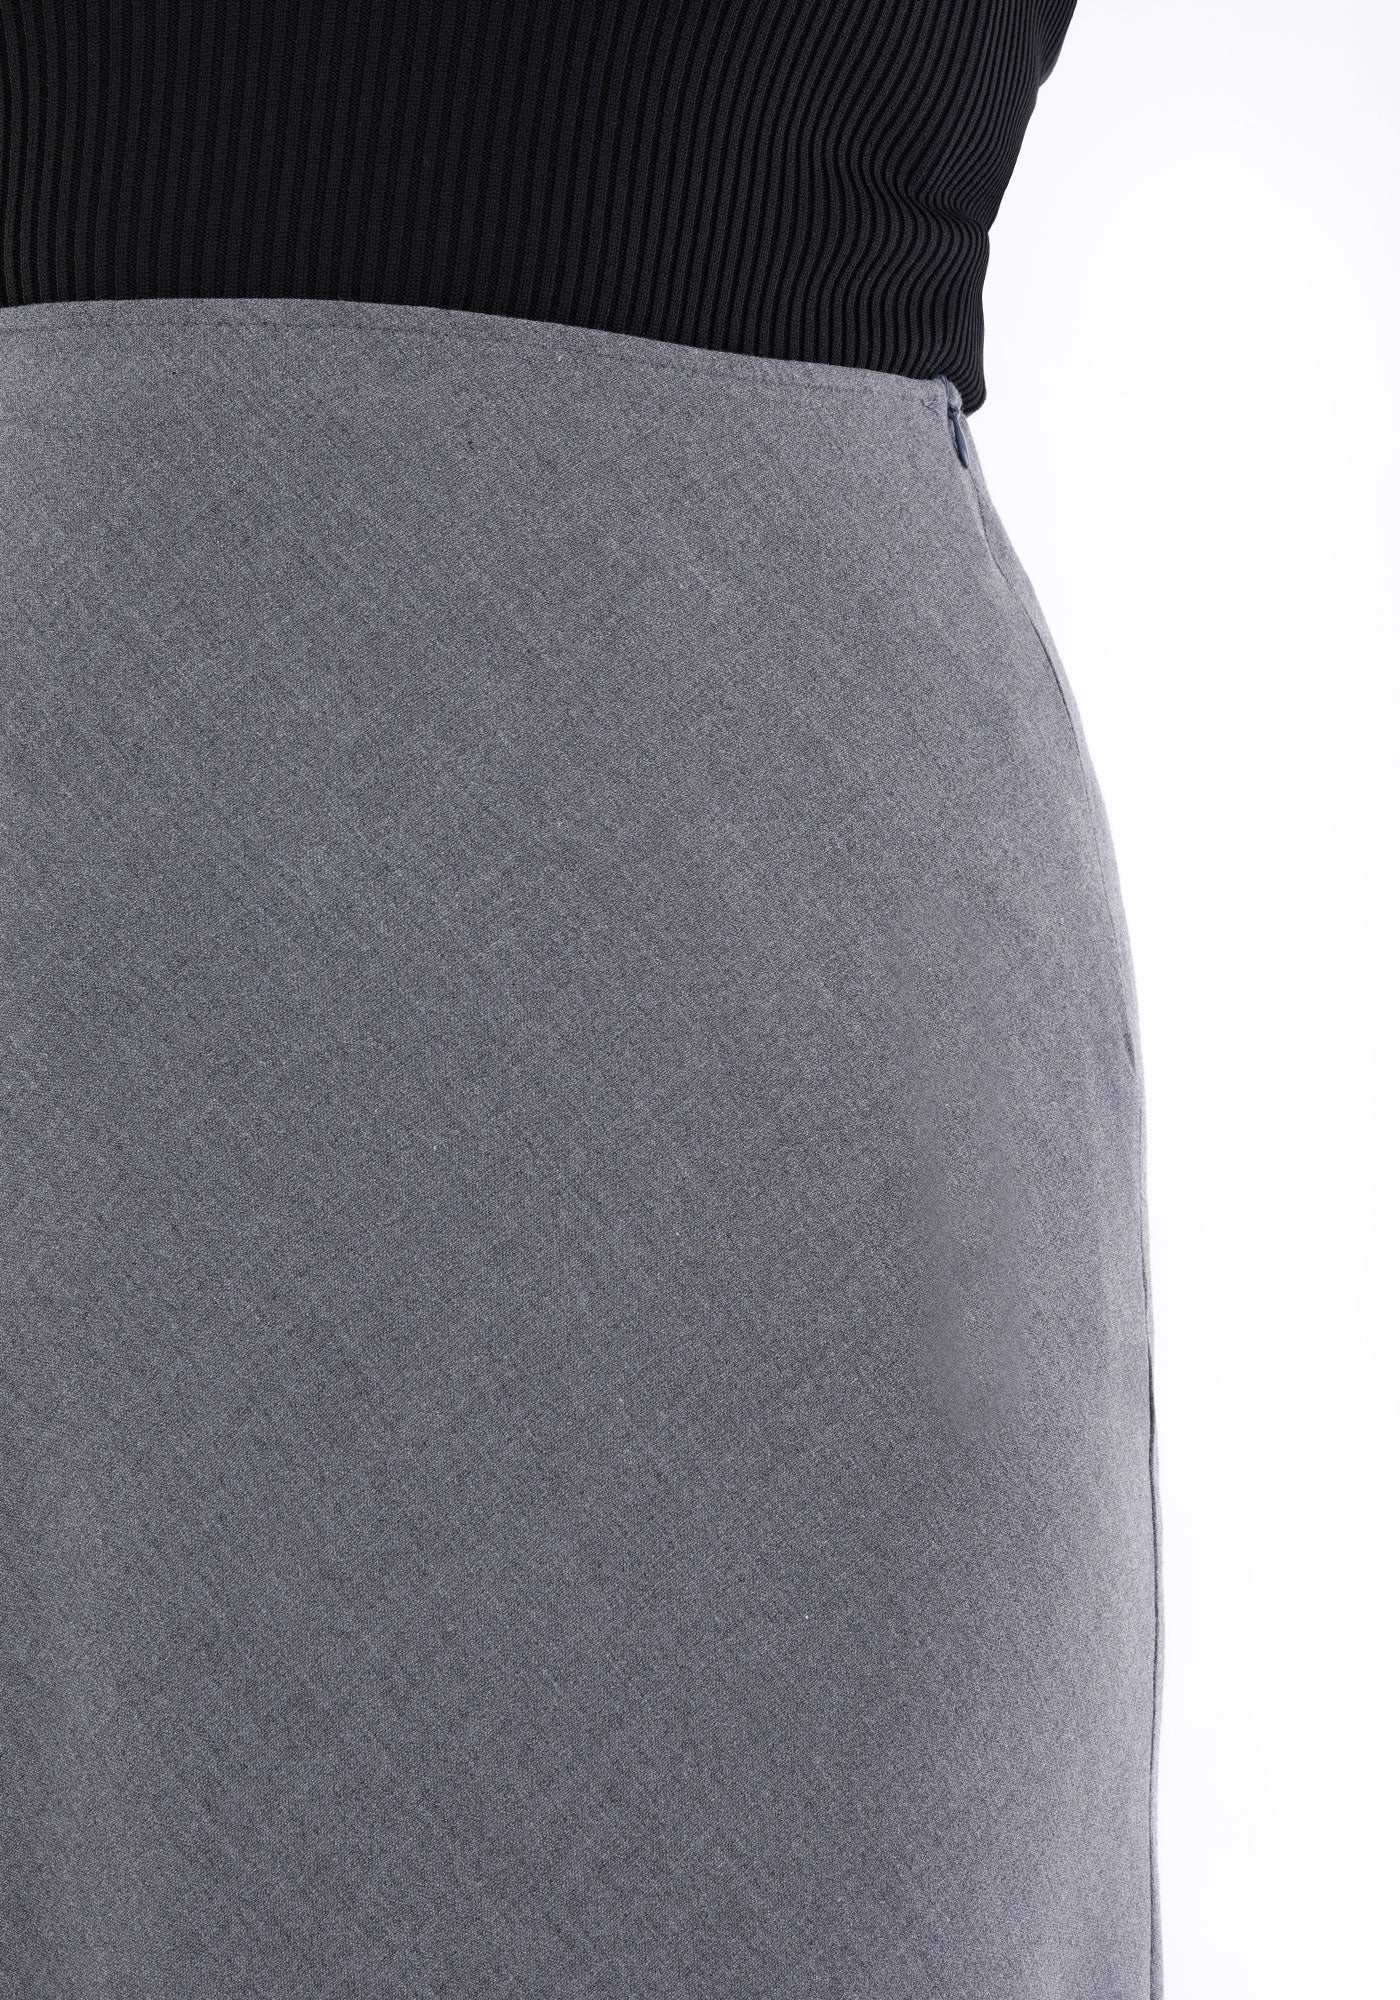 A-Line Midi Skirts G-Line